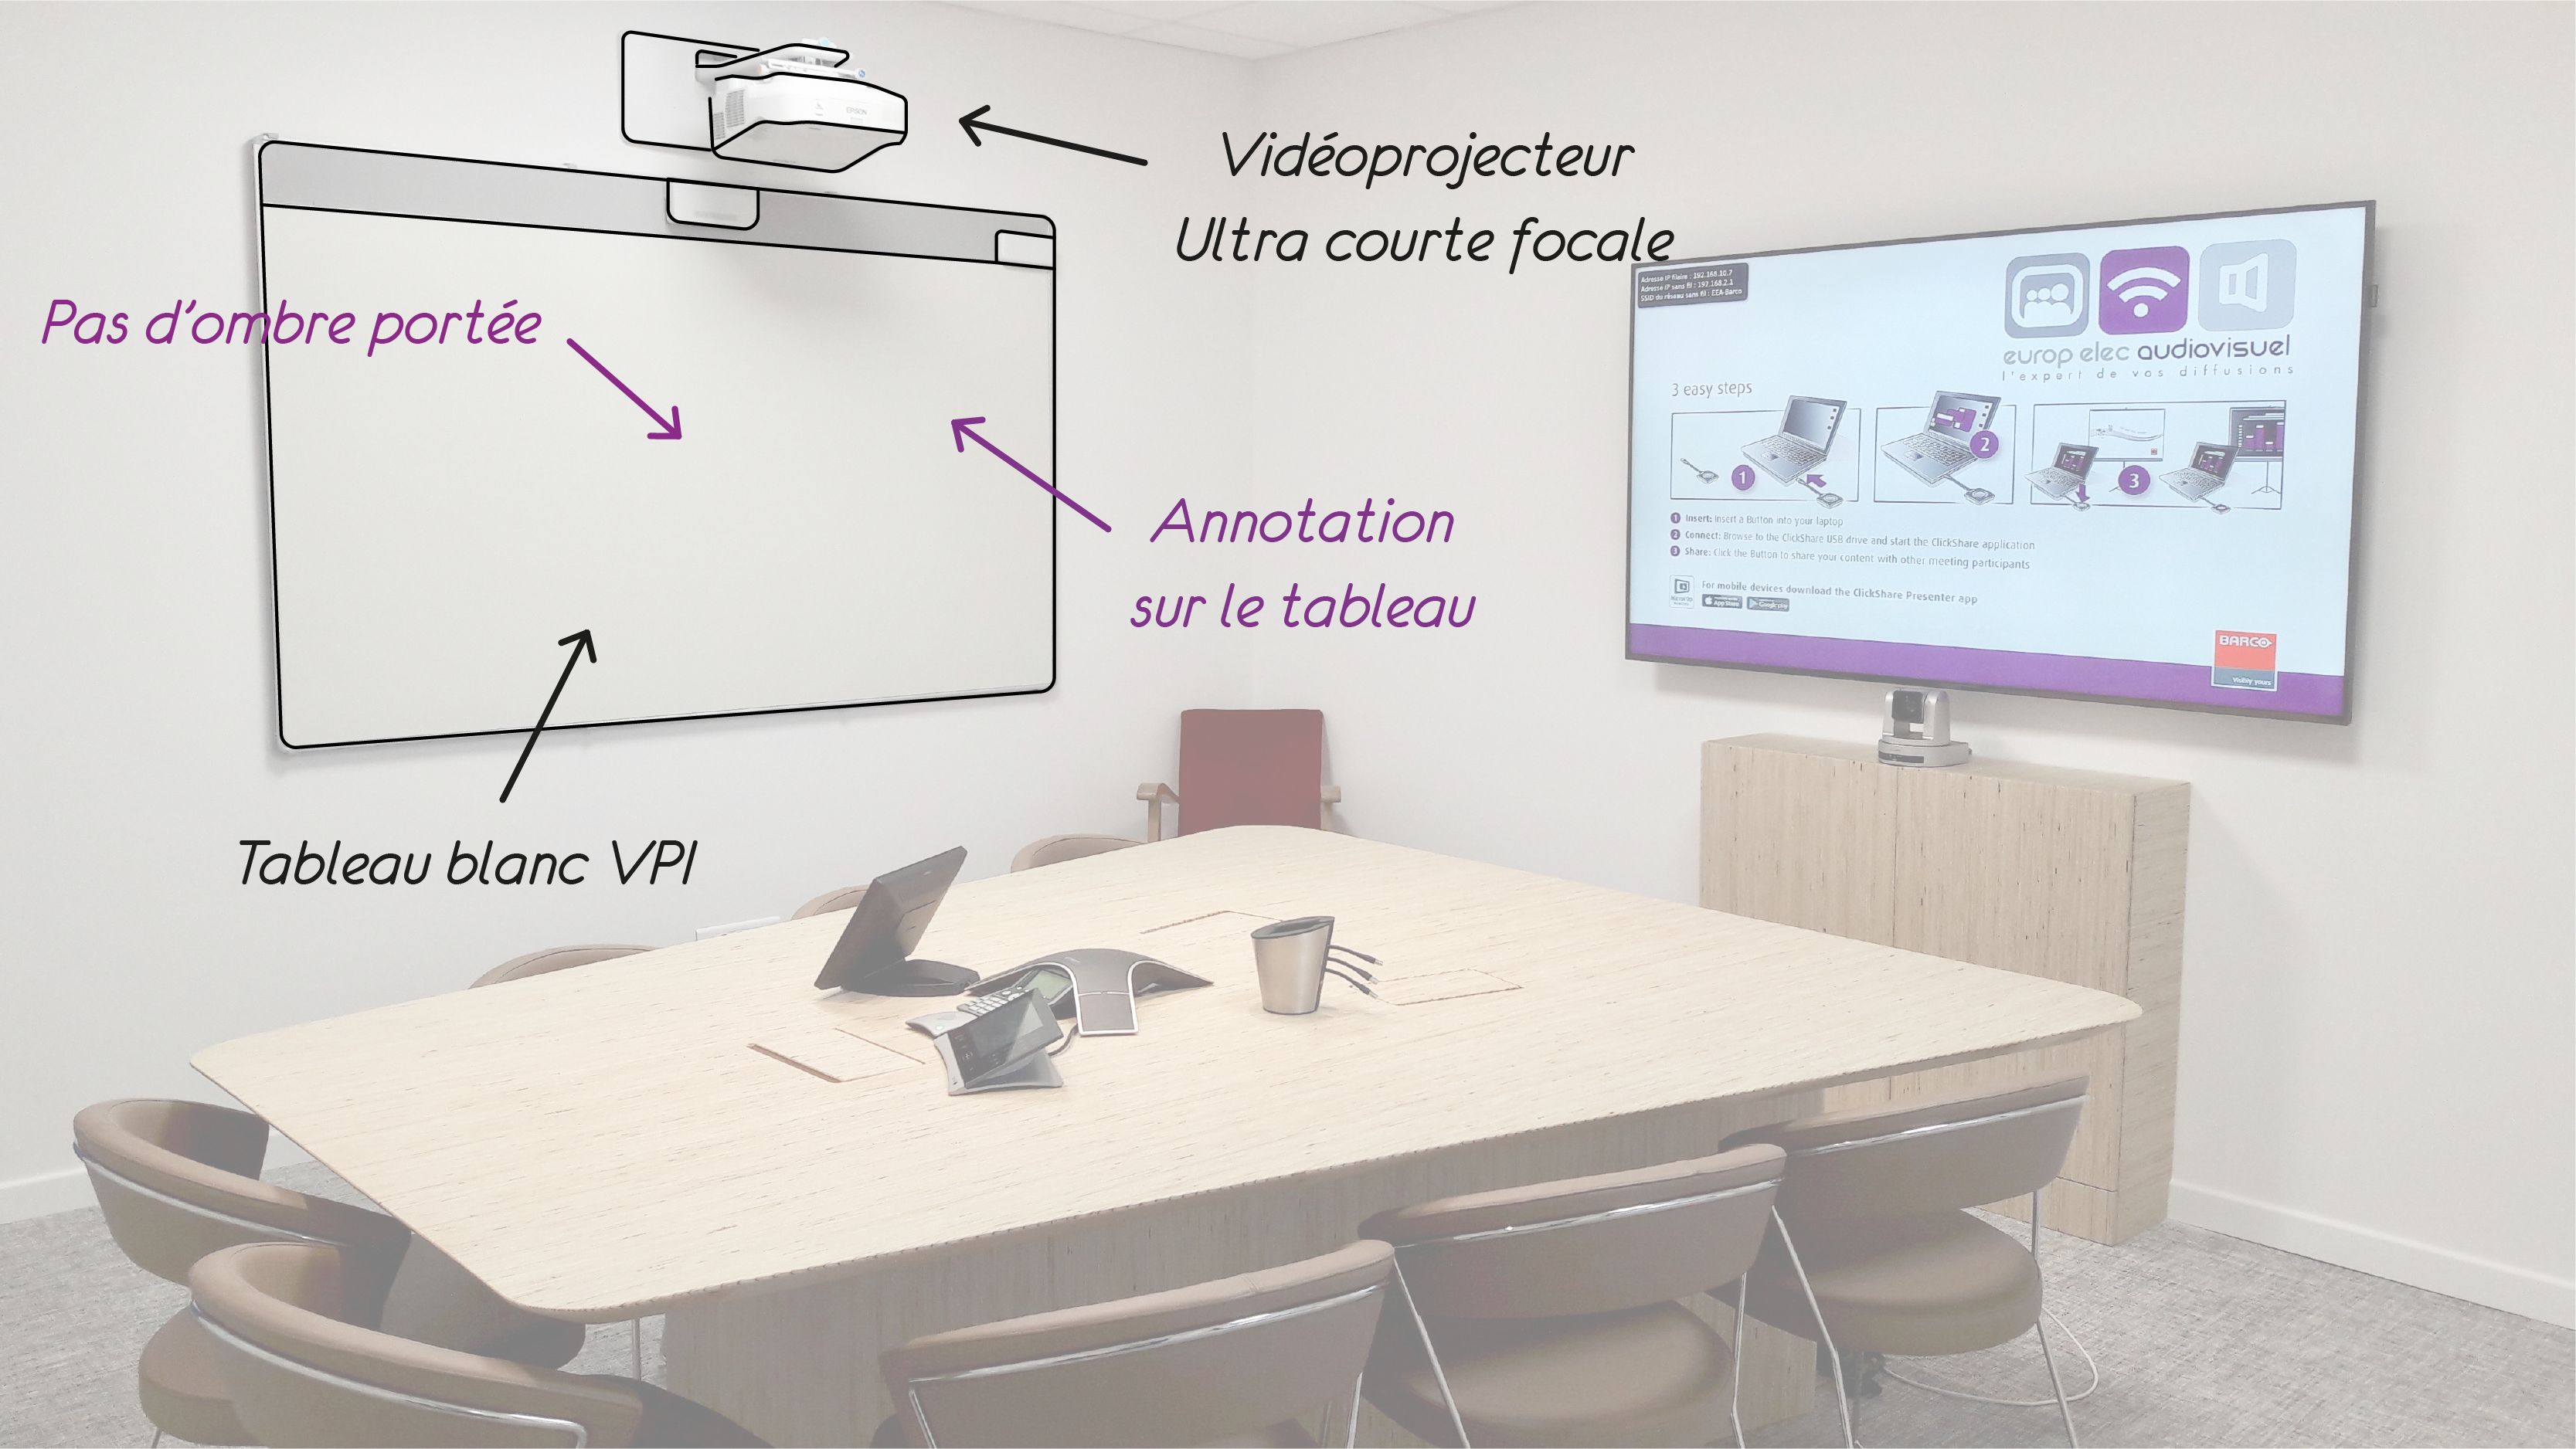 Videoprojecteur-interactif-Lyon